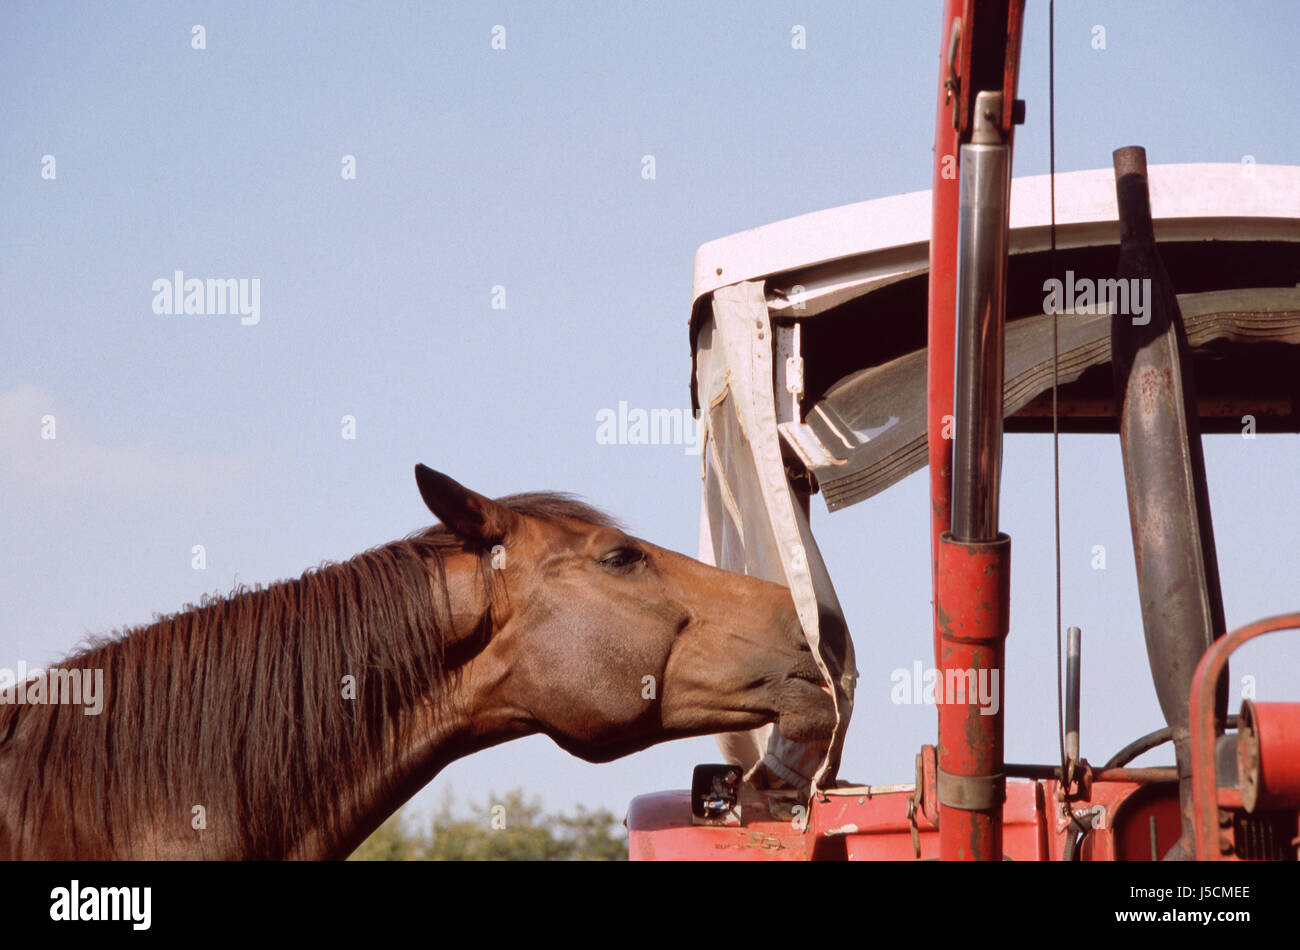 horse engineering curiosity interest tractor mane mudguard refusal browner dark Stock Photo